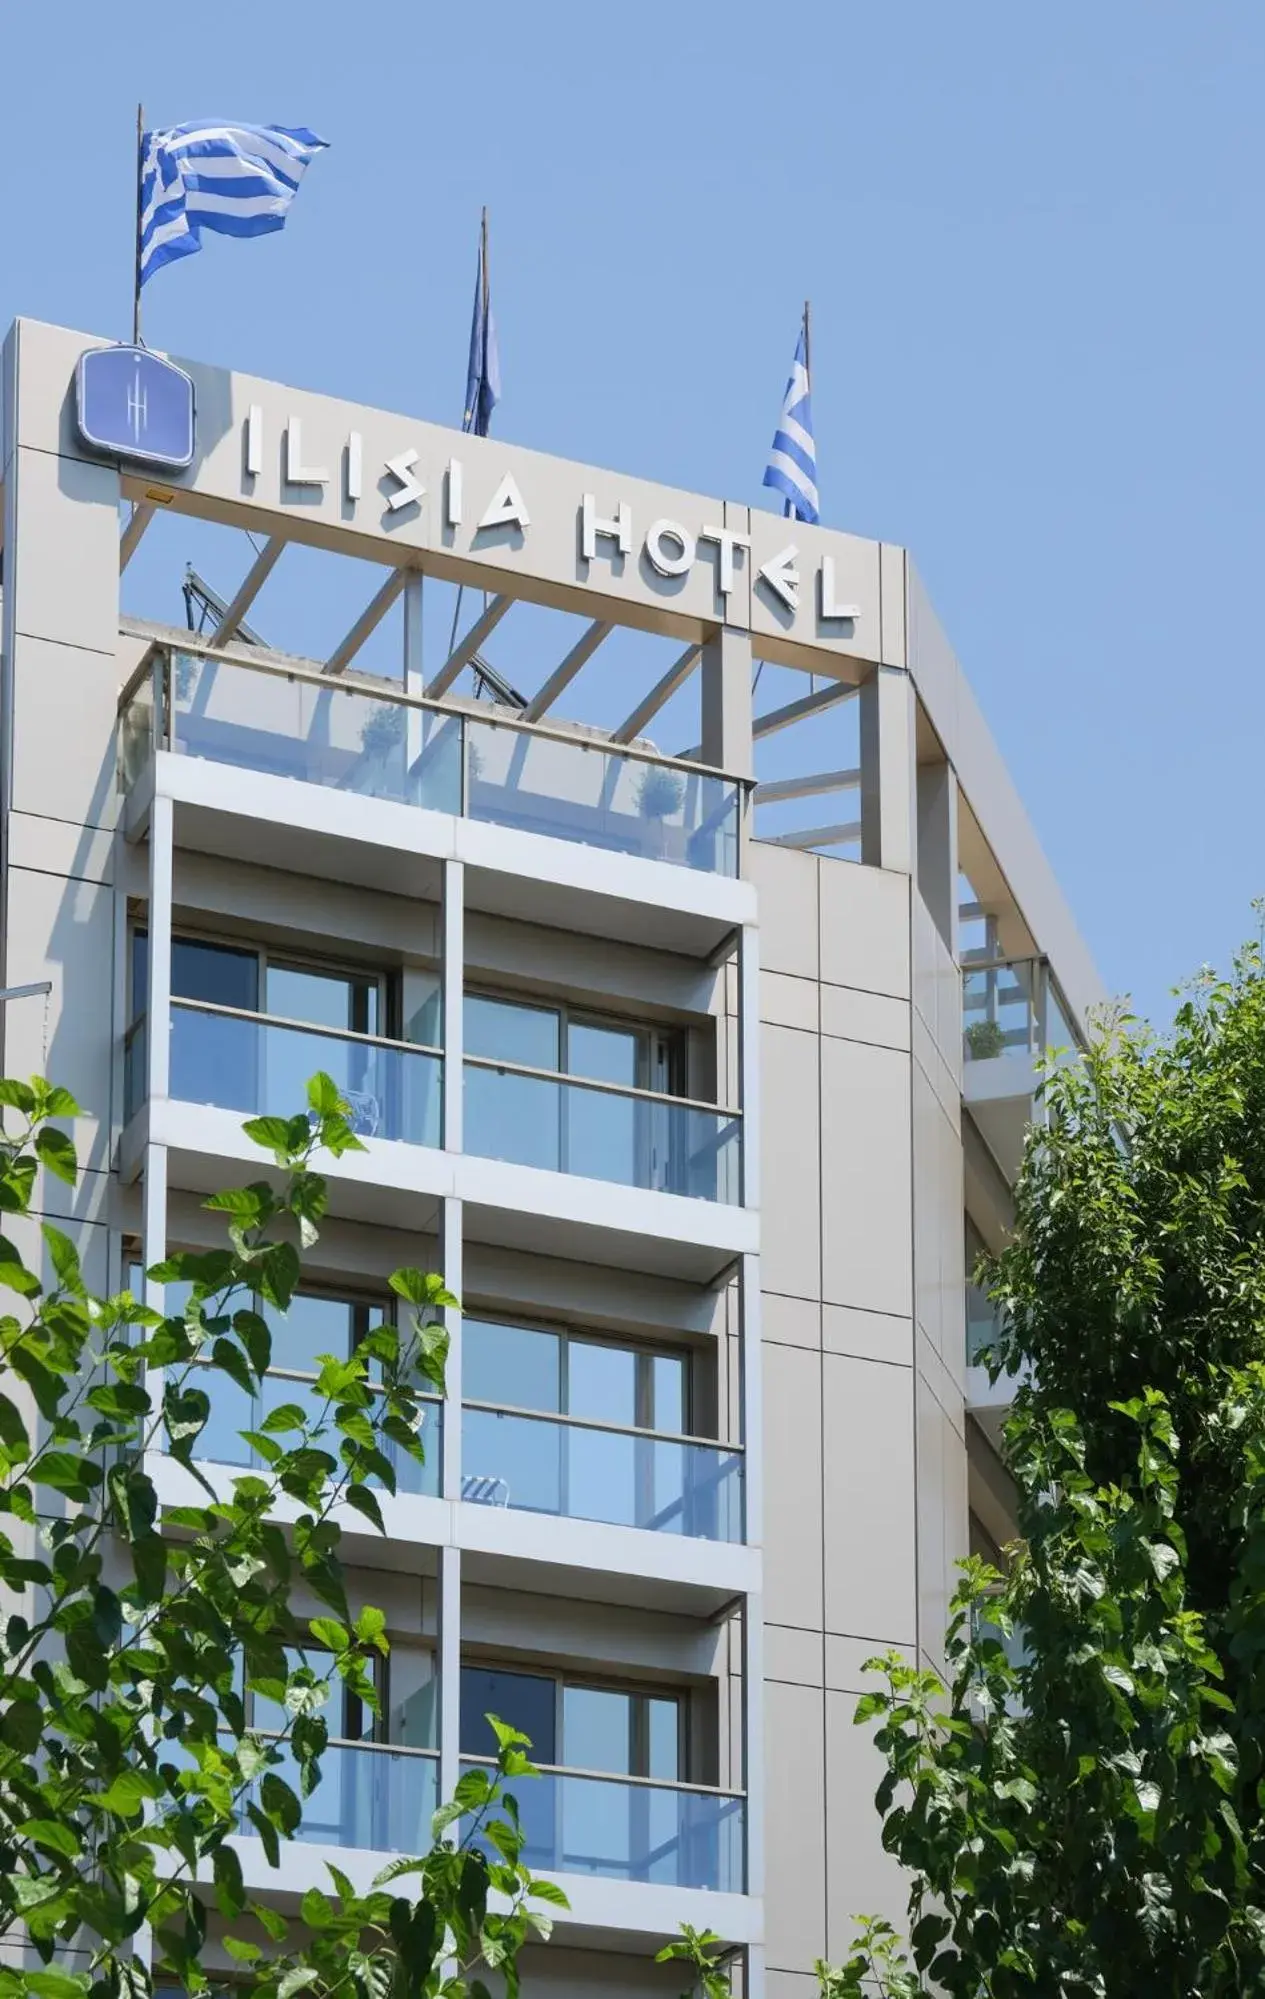 Property Building in Ilisia Hotel Athens